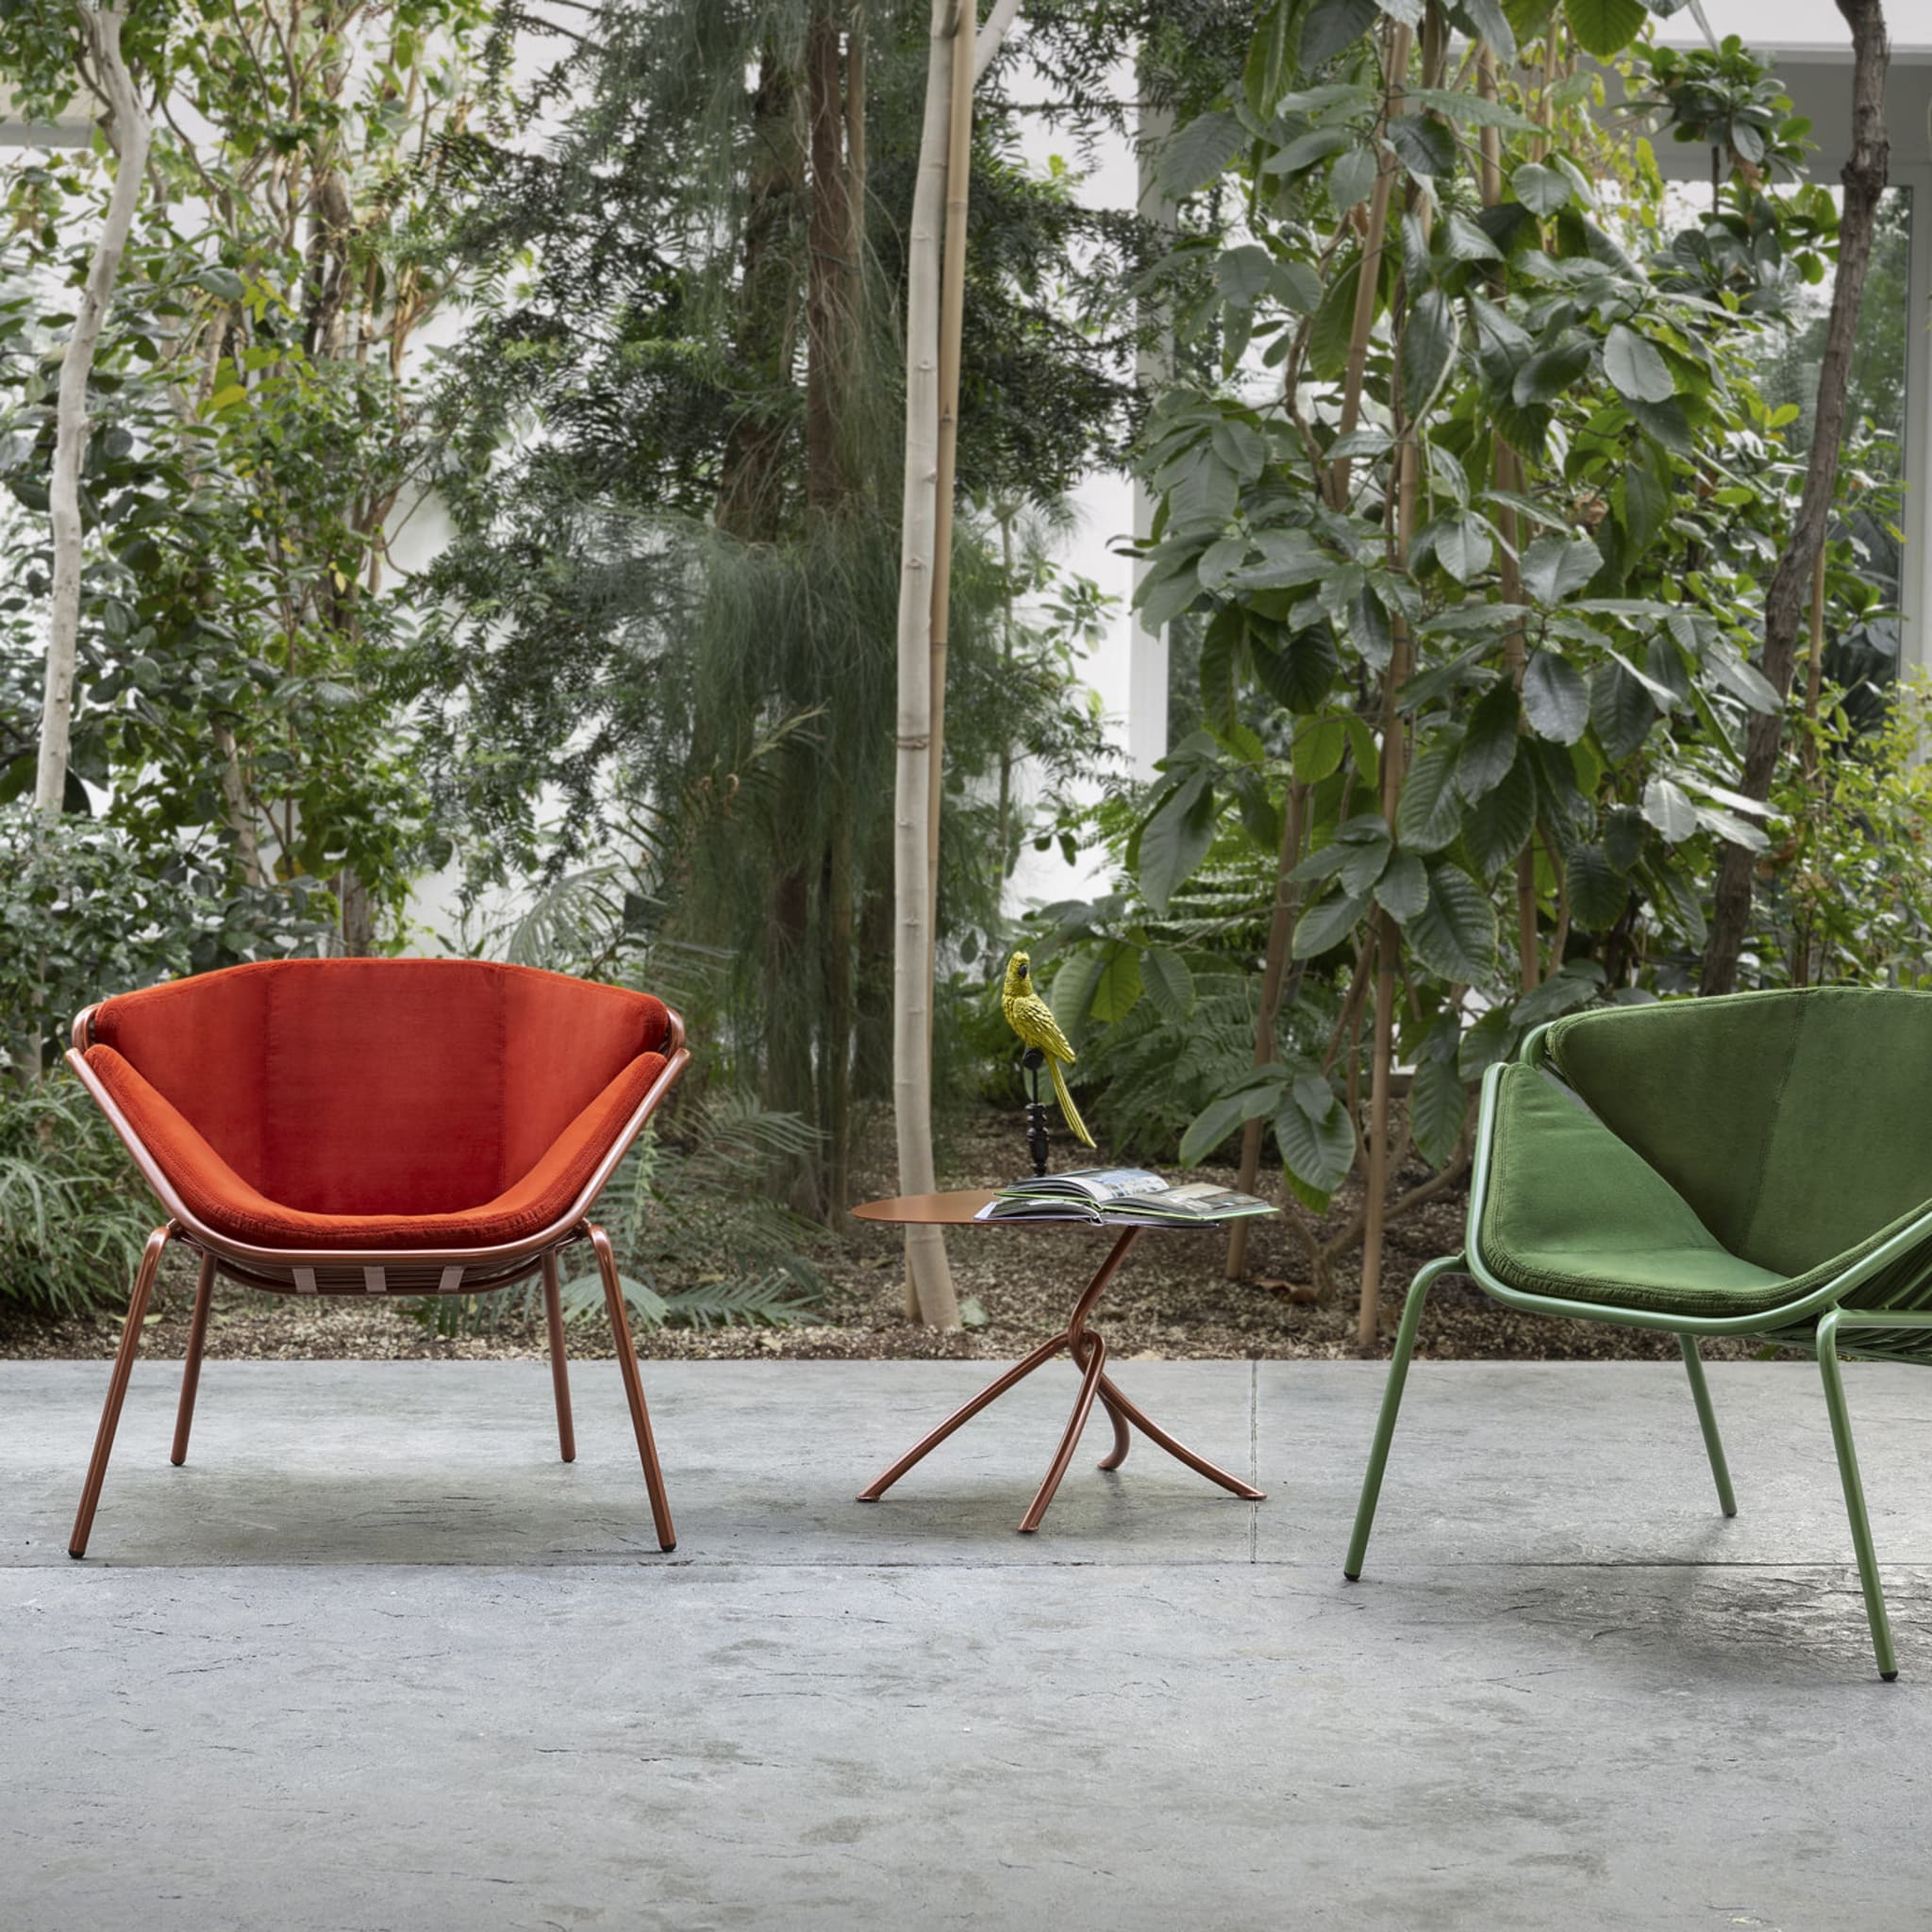 Skin Lounge Green Chair By Giacomo Cattani - Alternative view 1